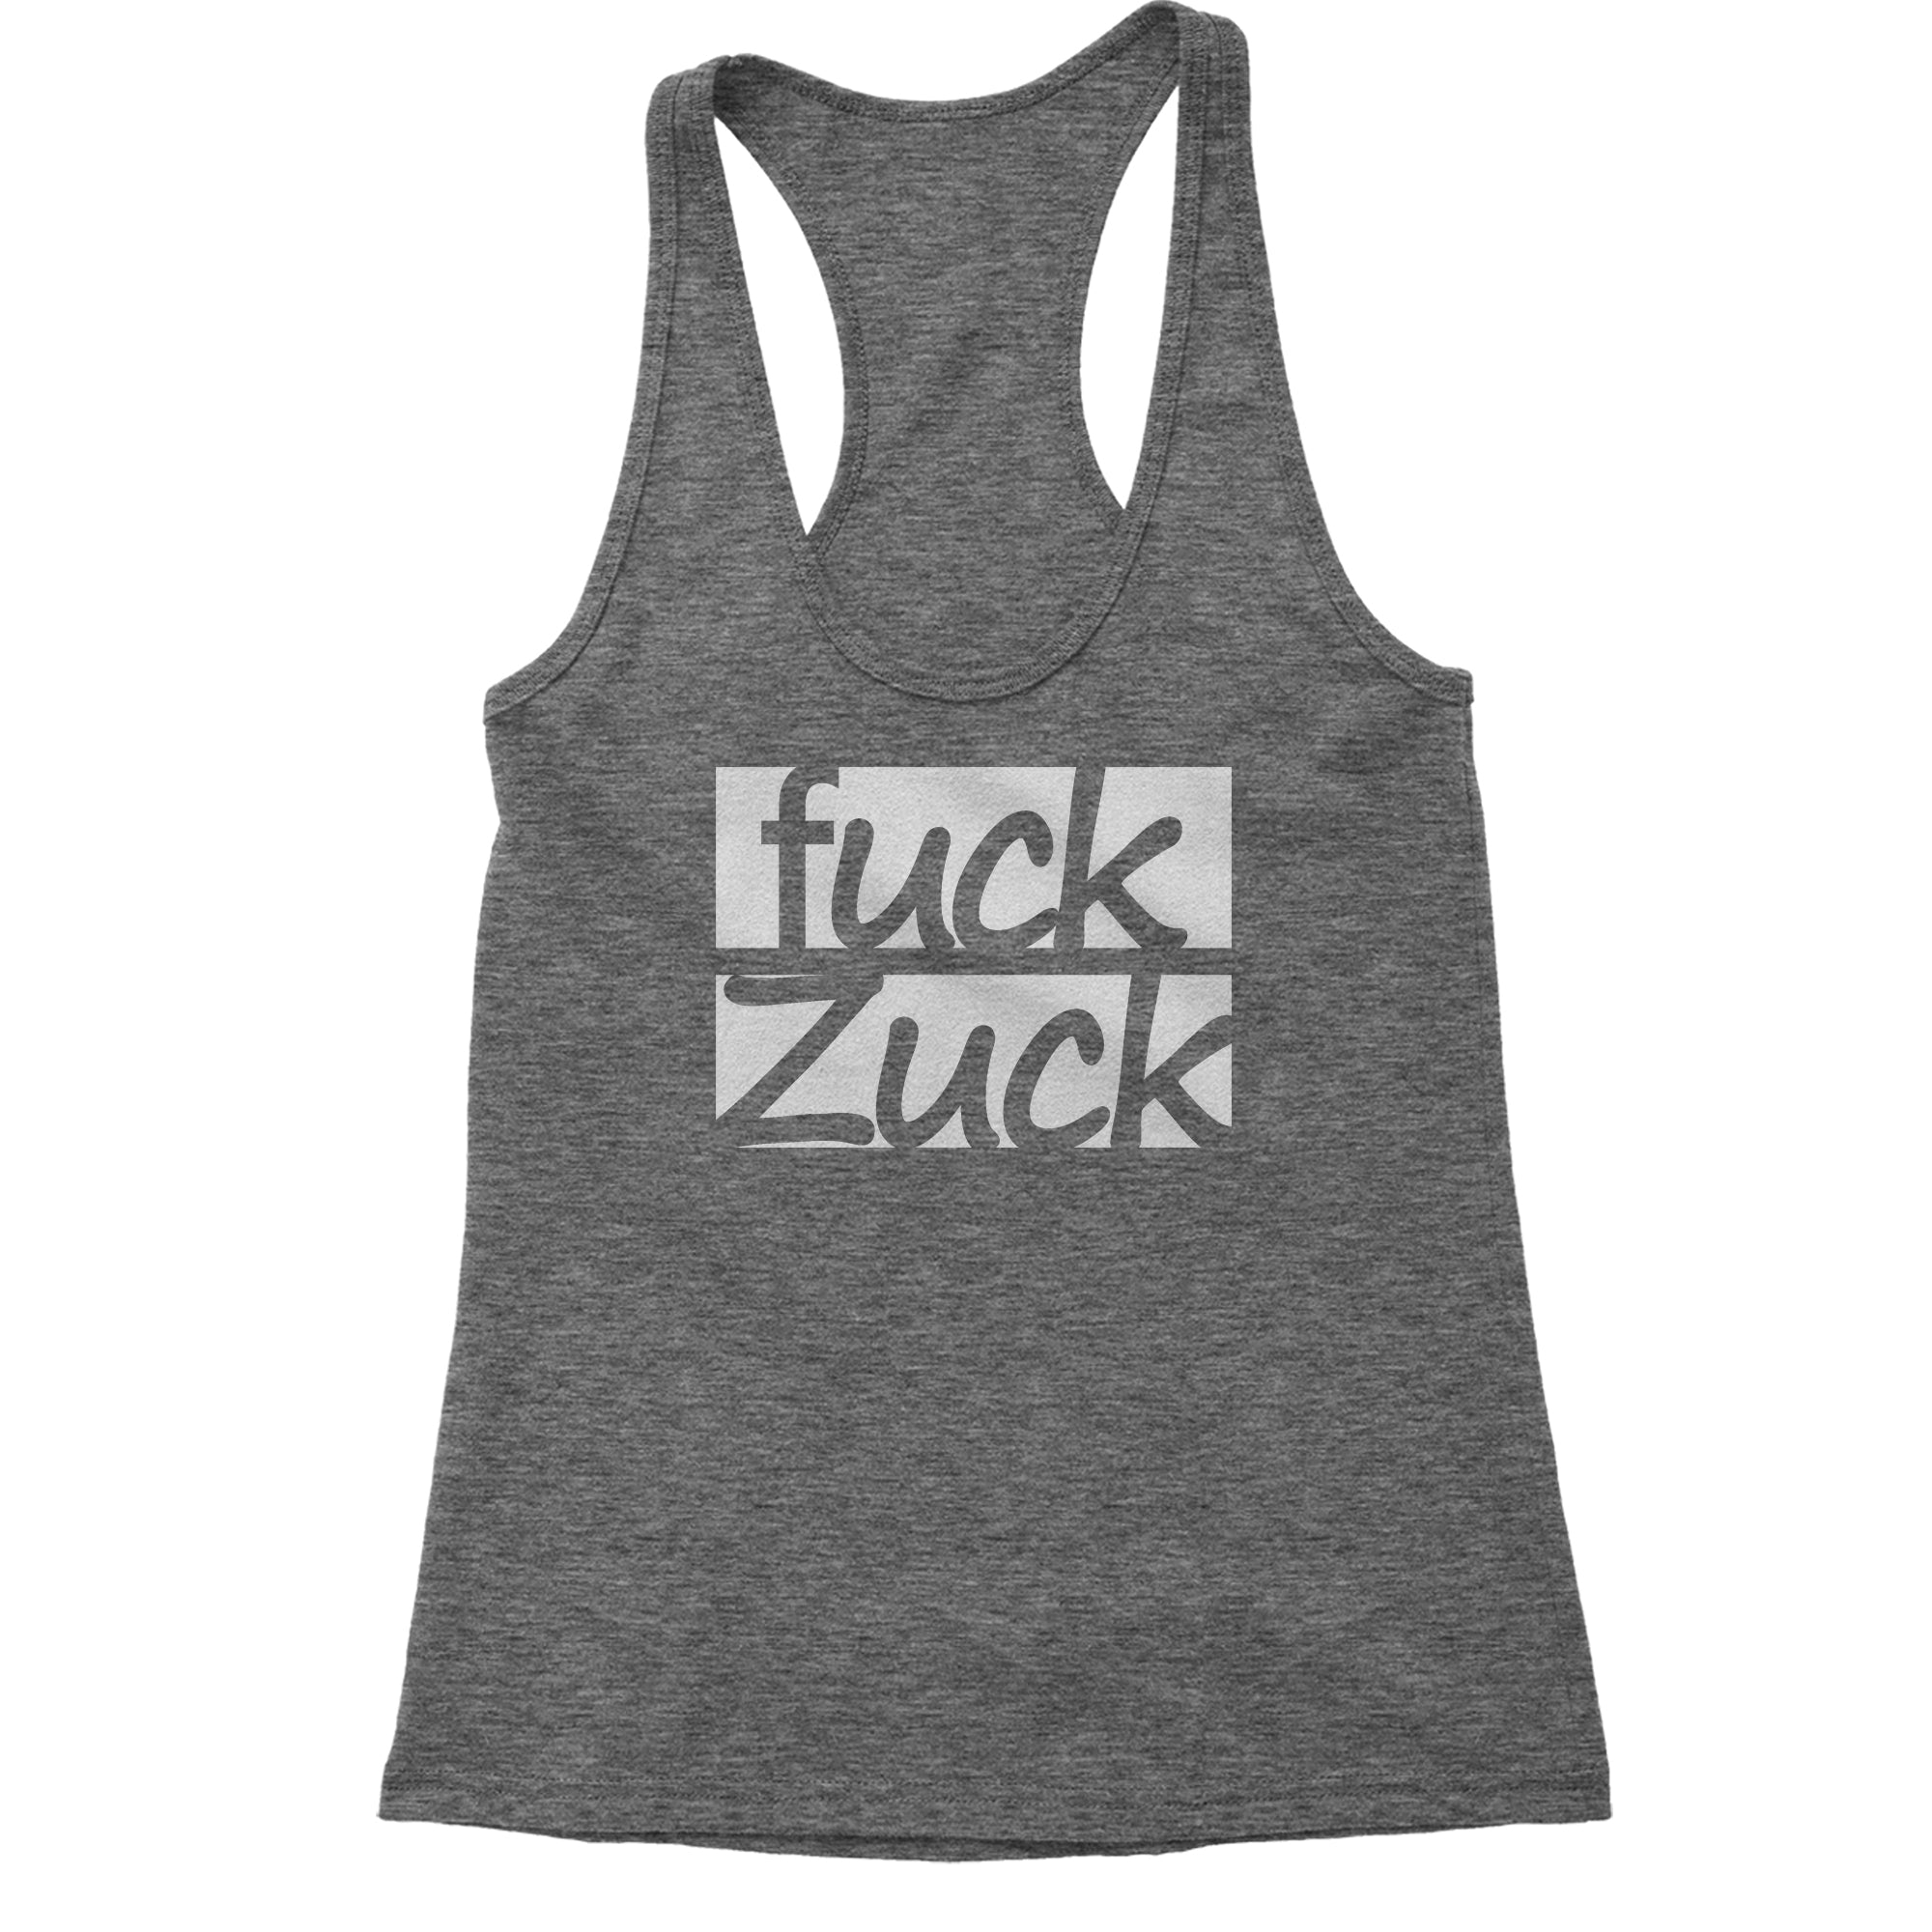 Fuck Zuck Zuckerberg Women's Racerback Tank